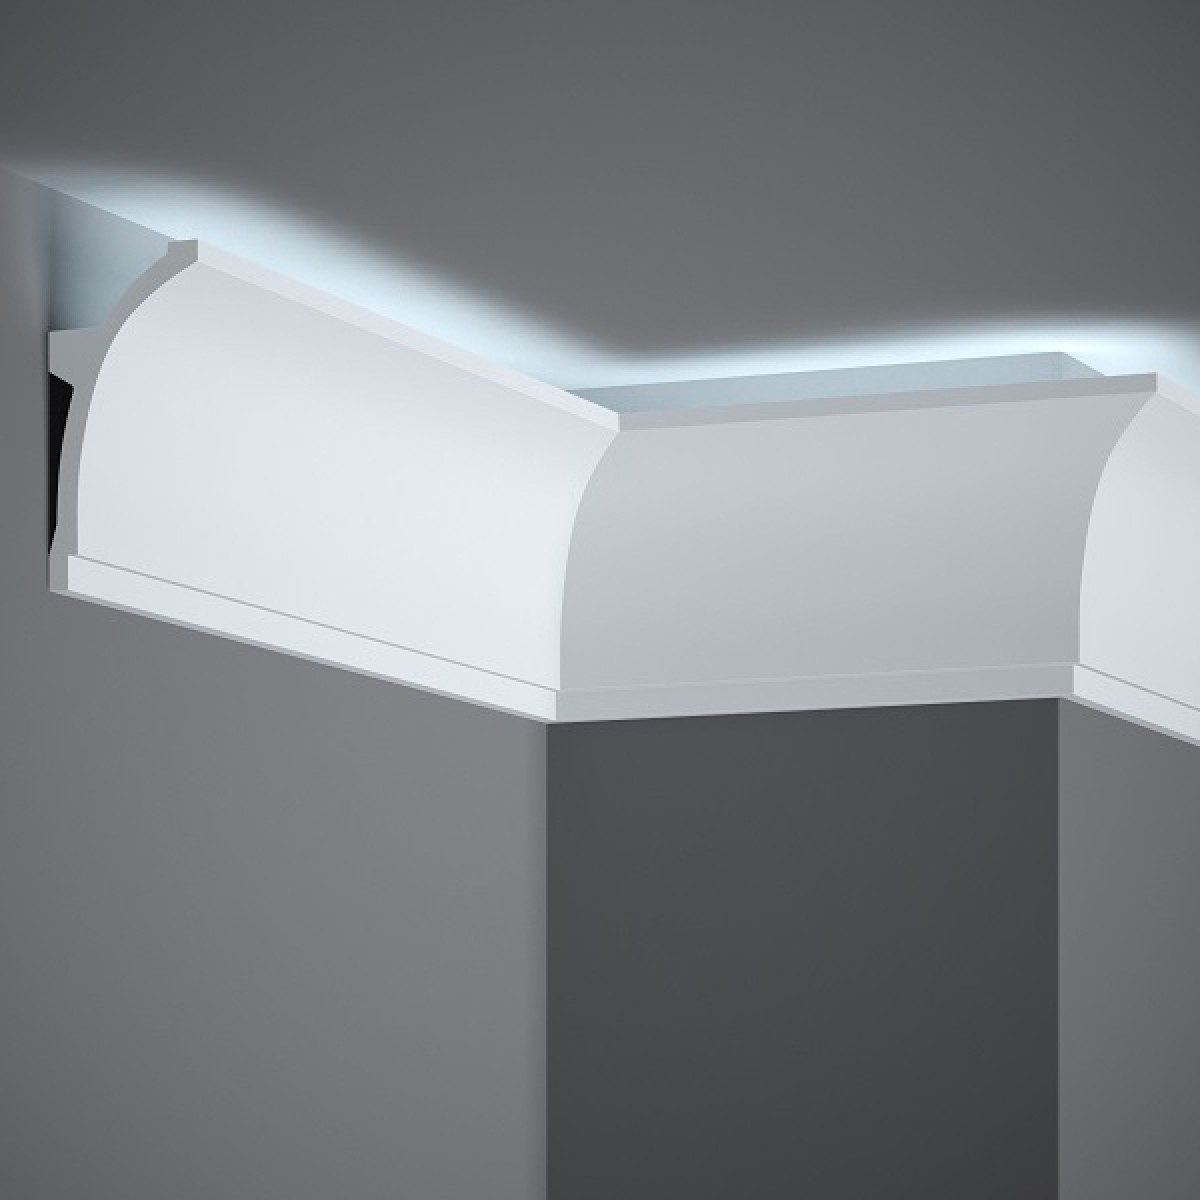 Scafe tavan (iluminat indirect, LED) Mardom Decor MRD-MDB100, material: ProFoam